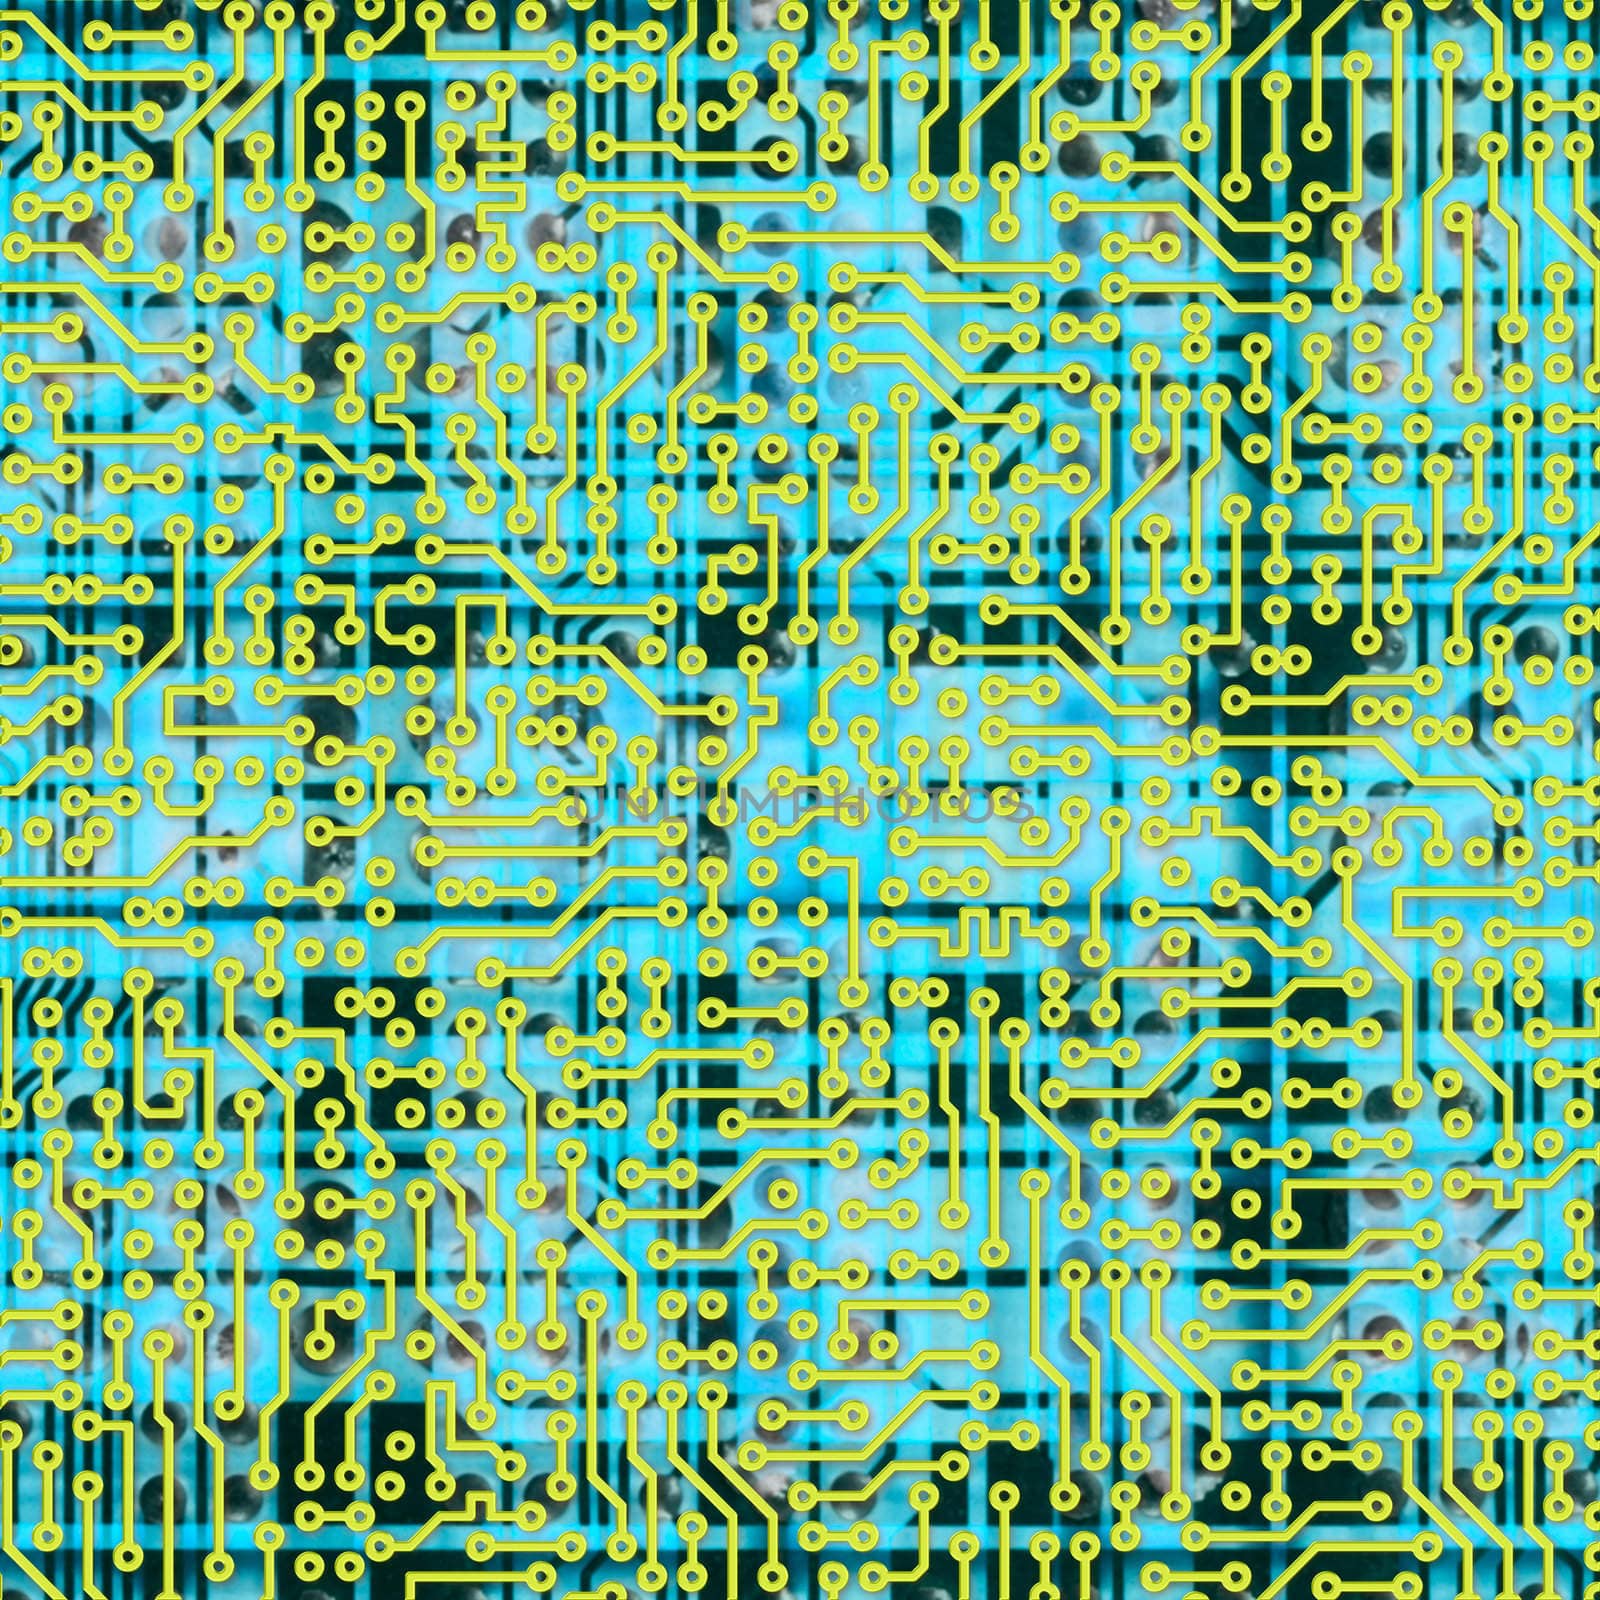 High tech square circuit board graphic texture